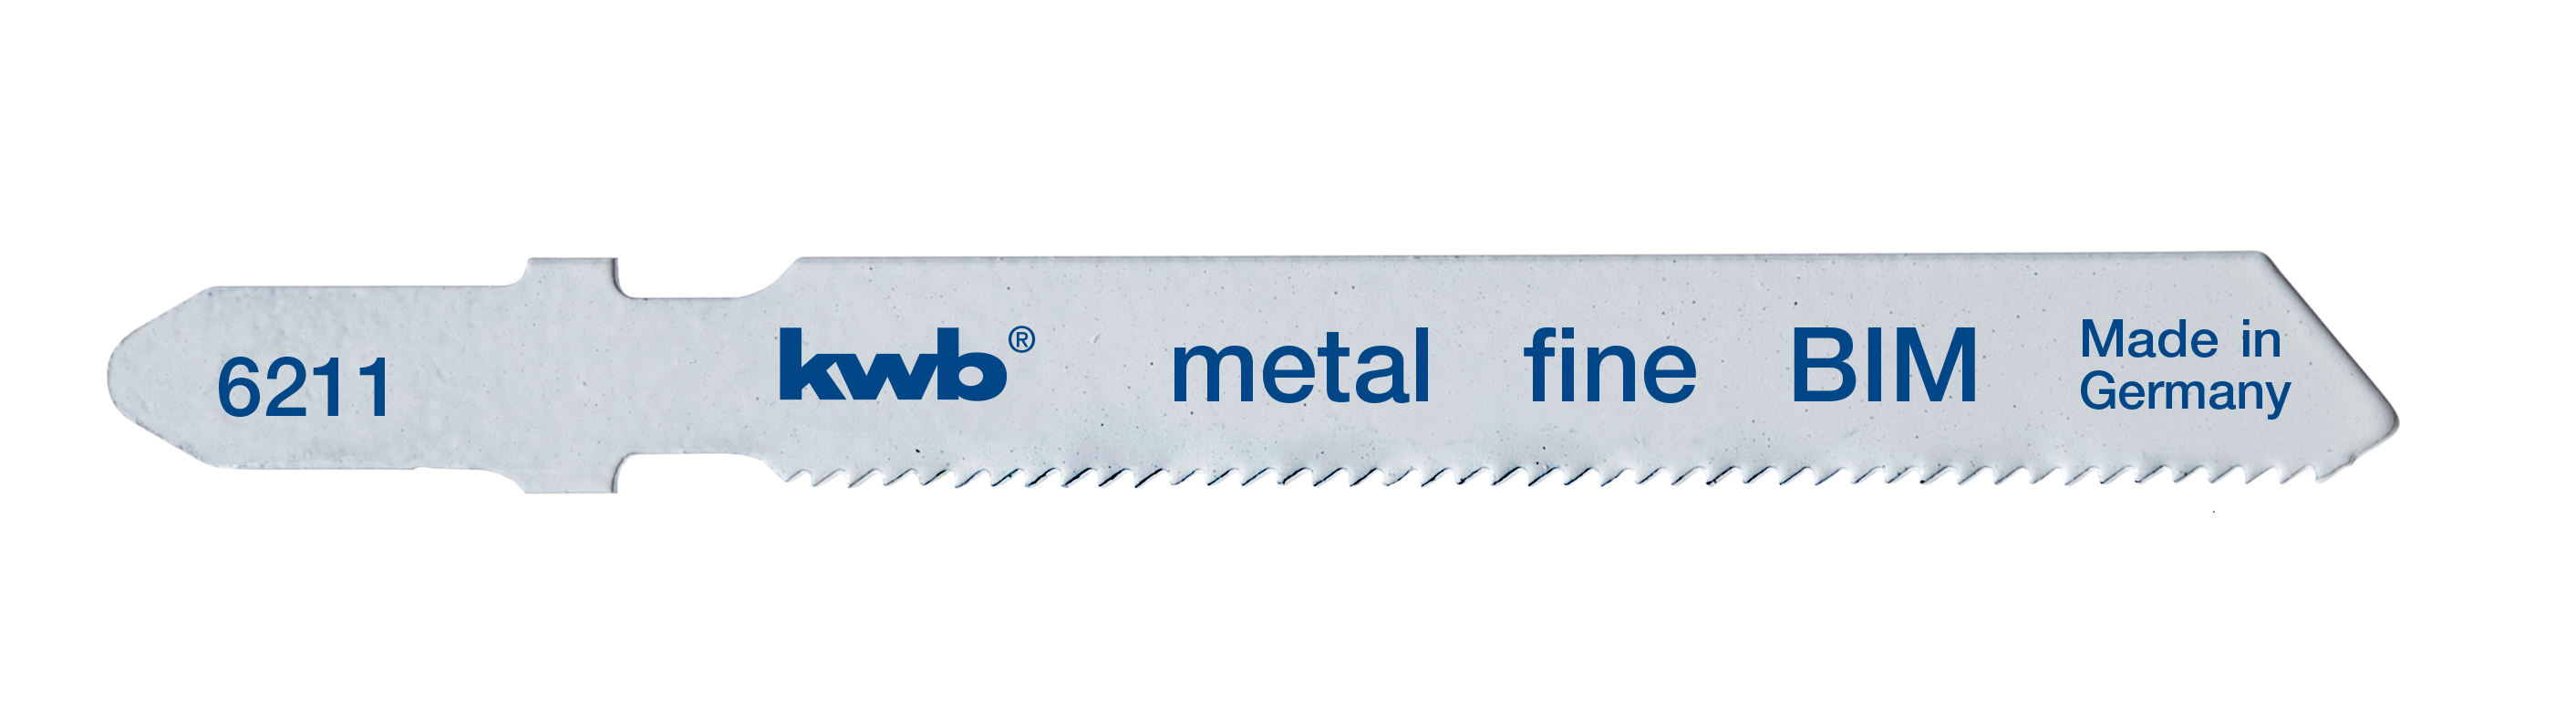 KWB BURMEISTER Stichsägeblätter BiM Metall fein 77 mm (2 Stück) kwb Premium